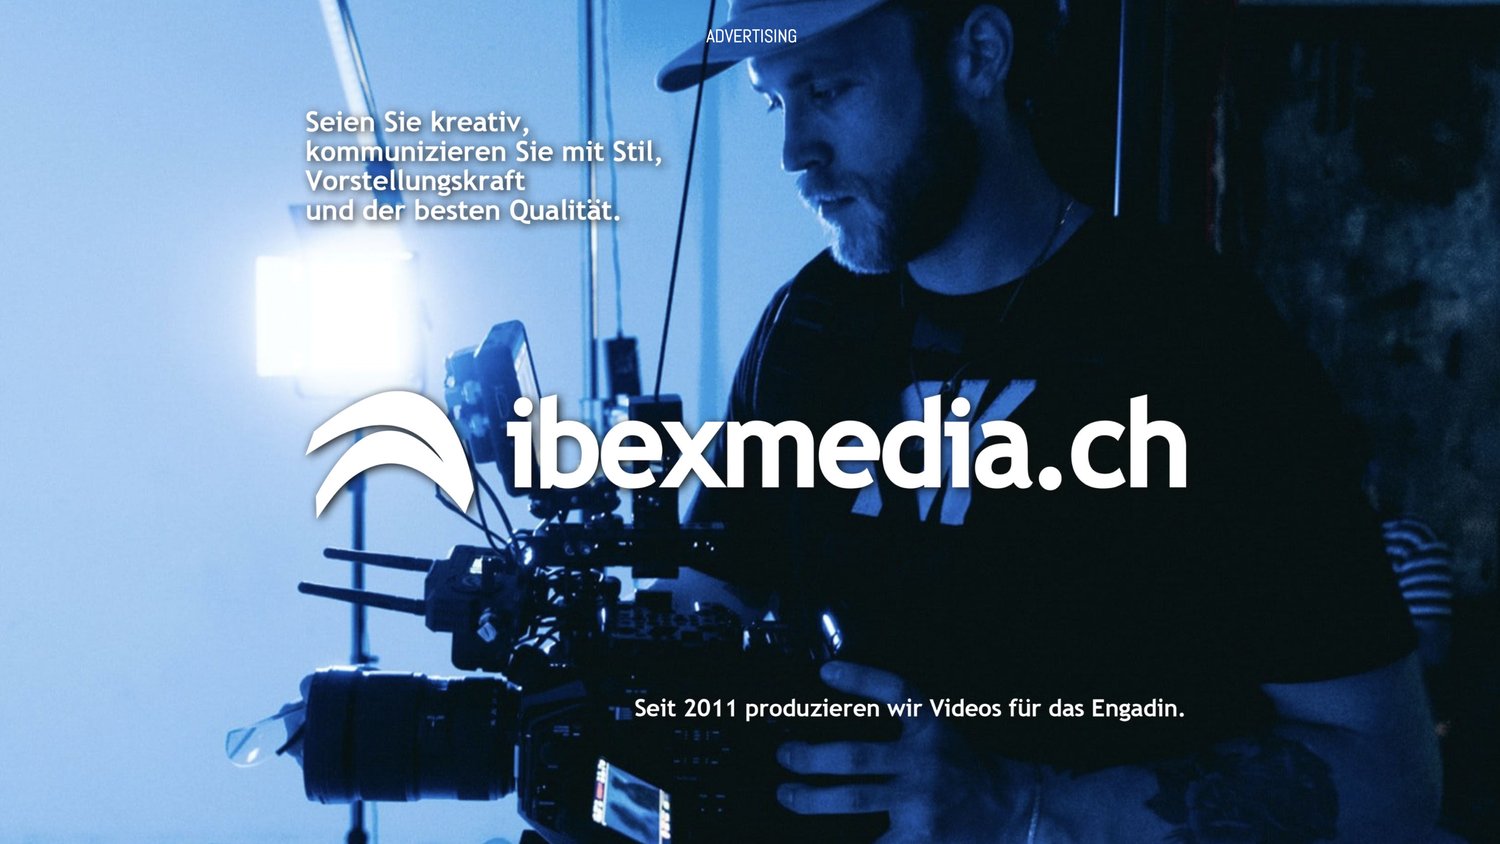 (c) Ibexmedia.ch